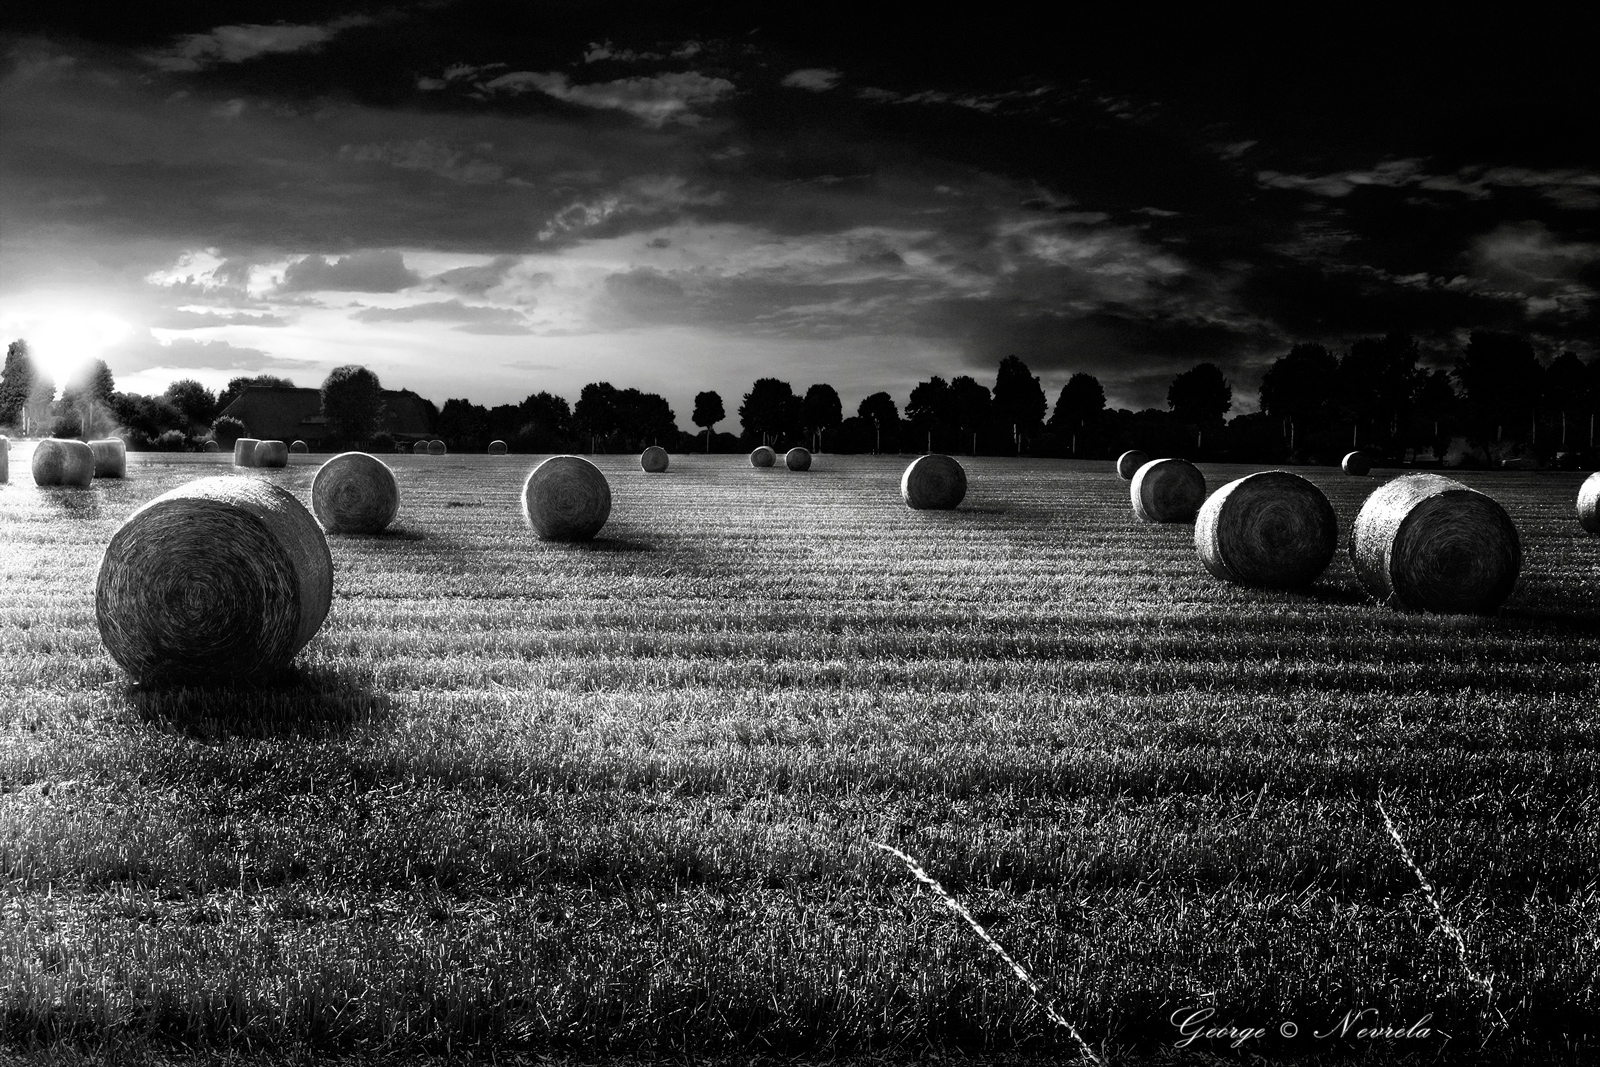 Harvest-Bales-of-Straw-bw